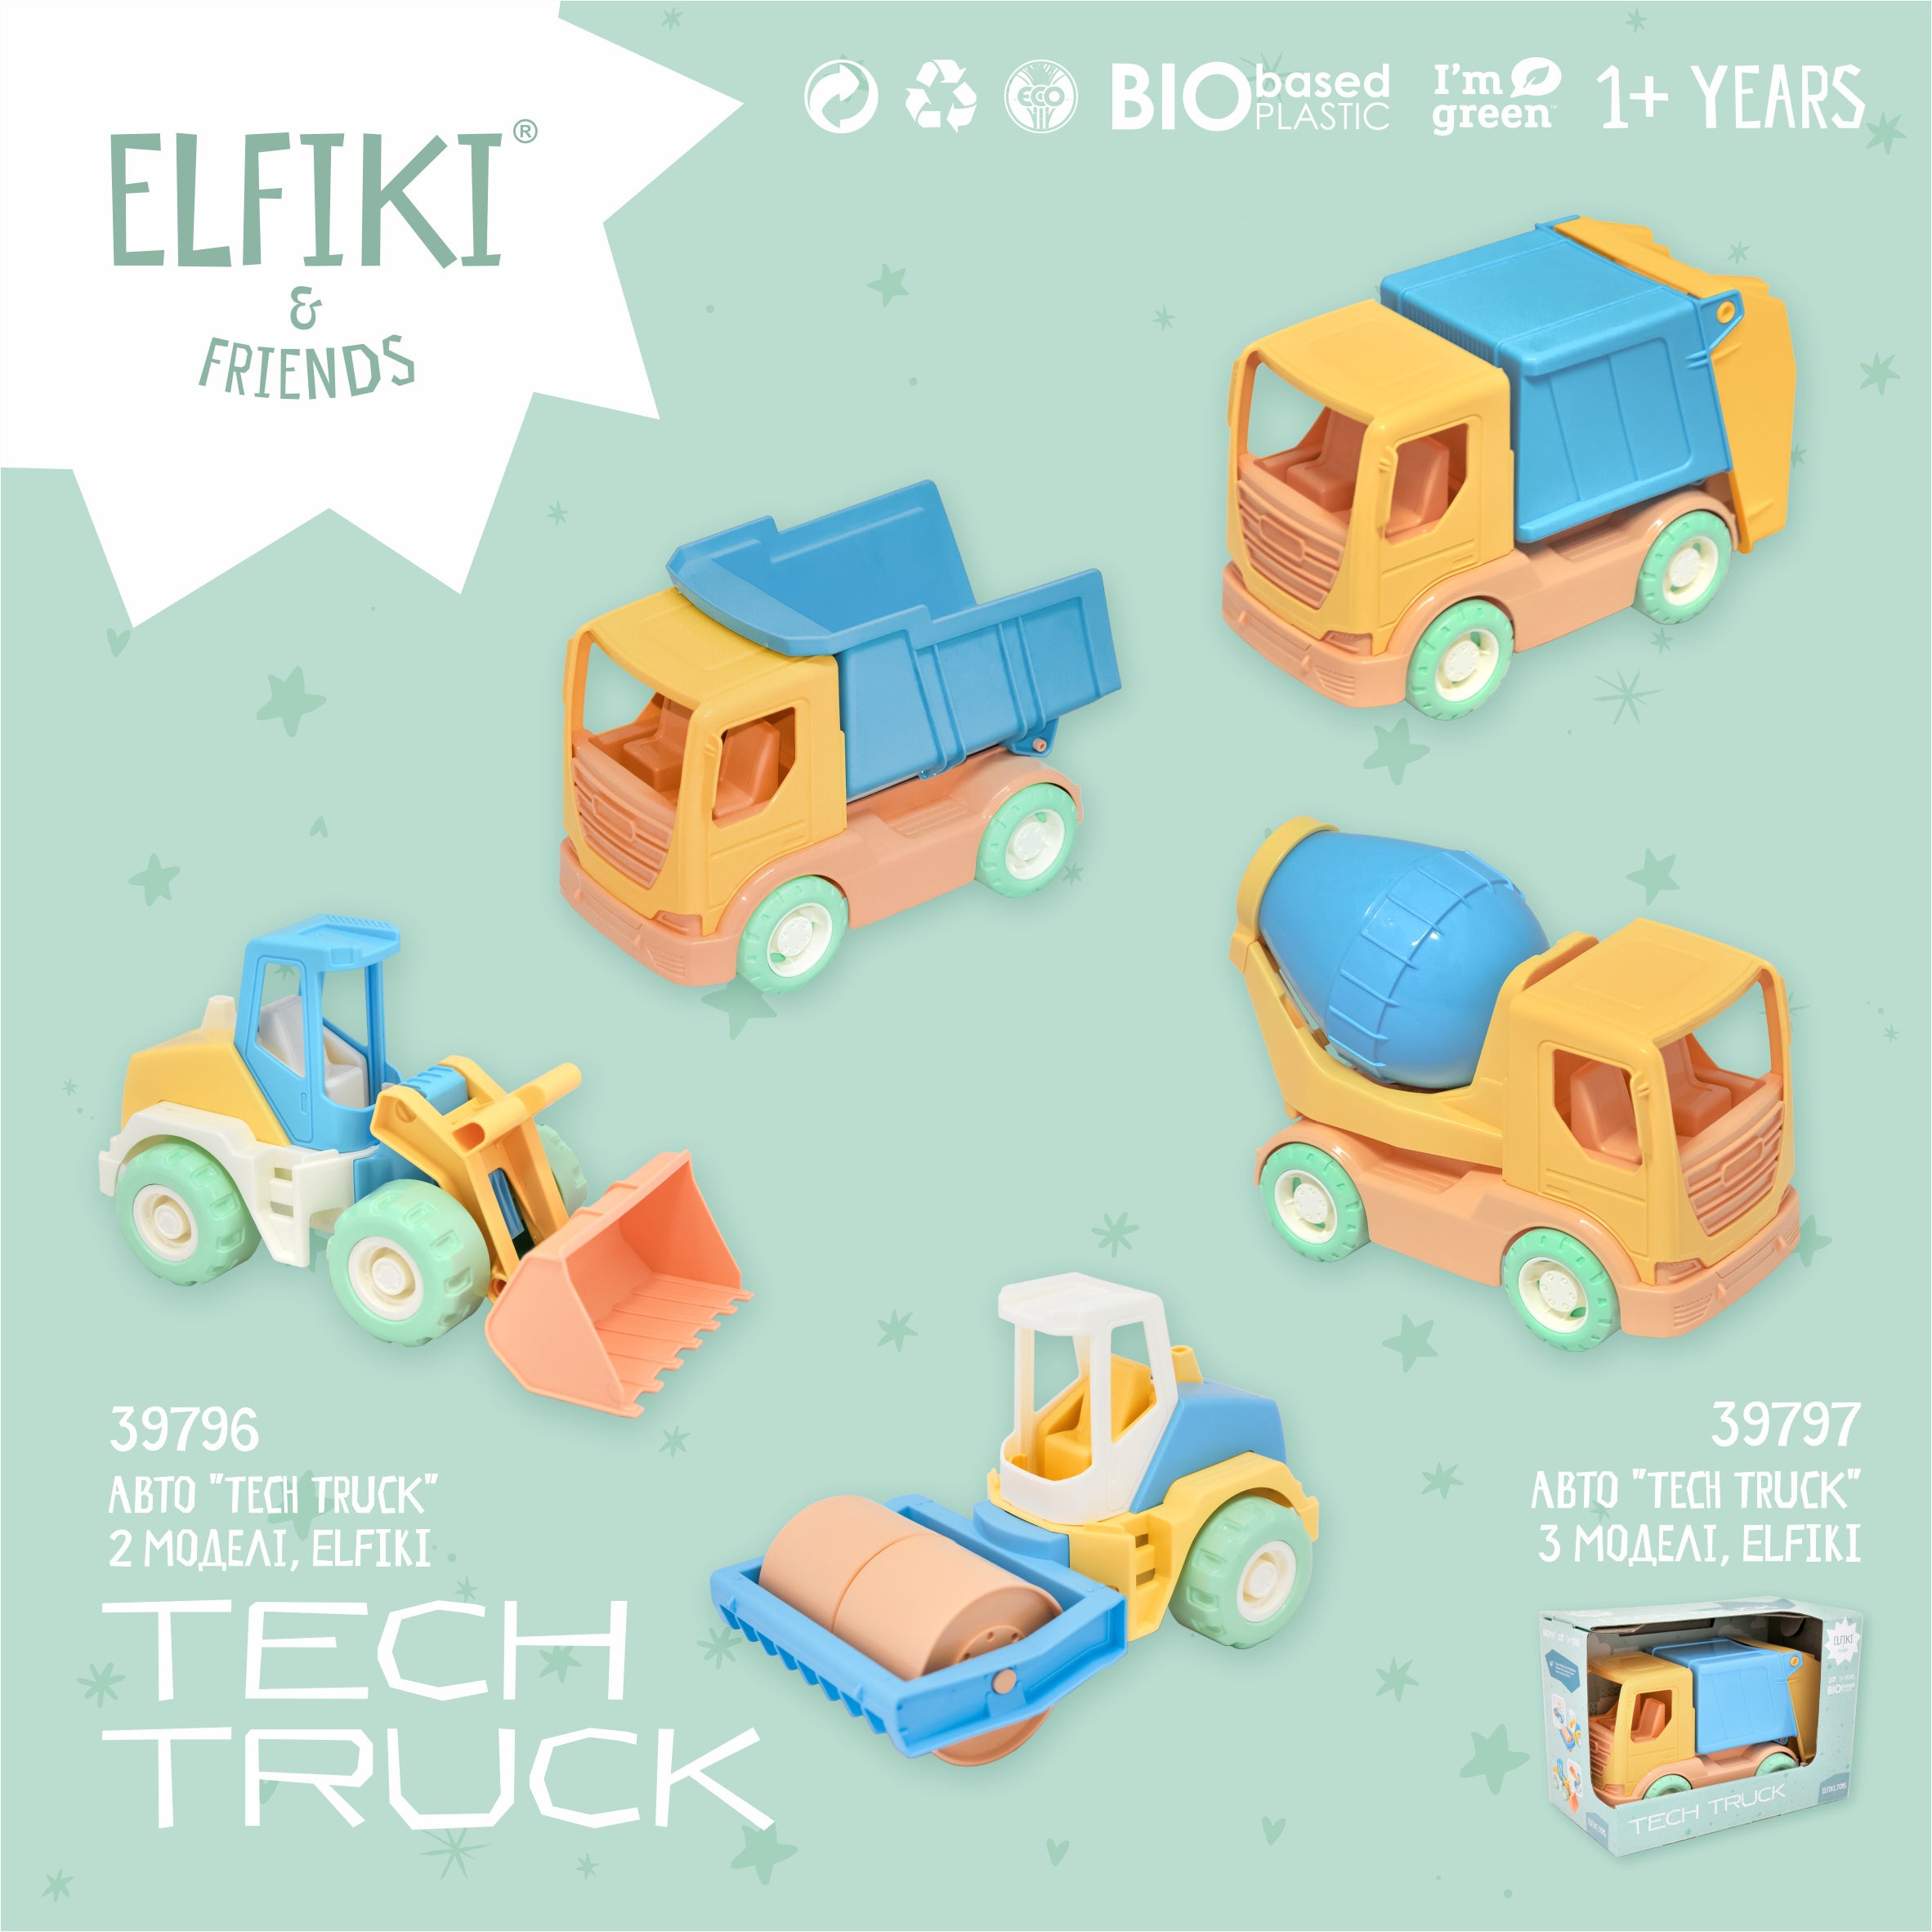 Bioplastic toys - Garbage truck.